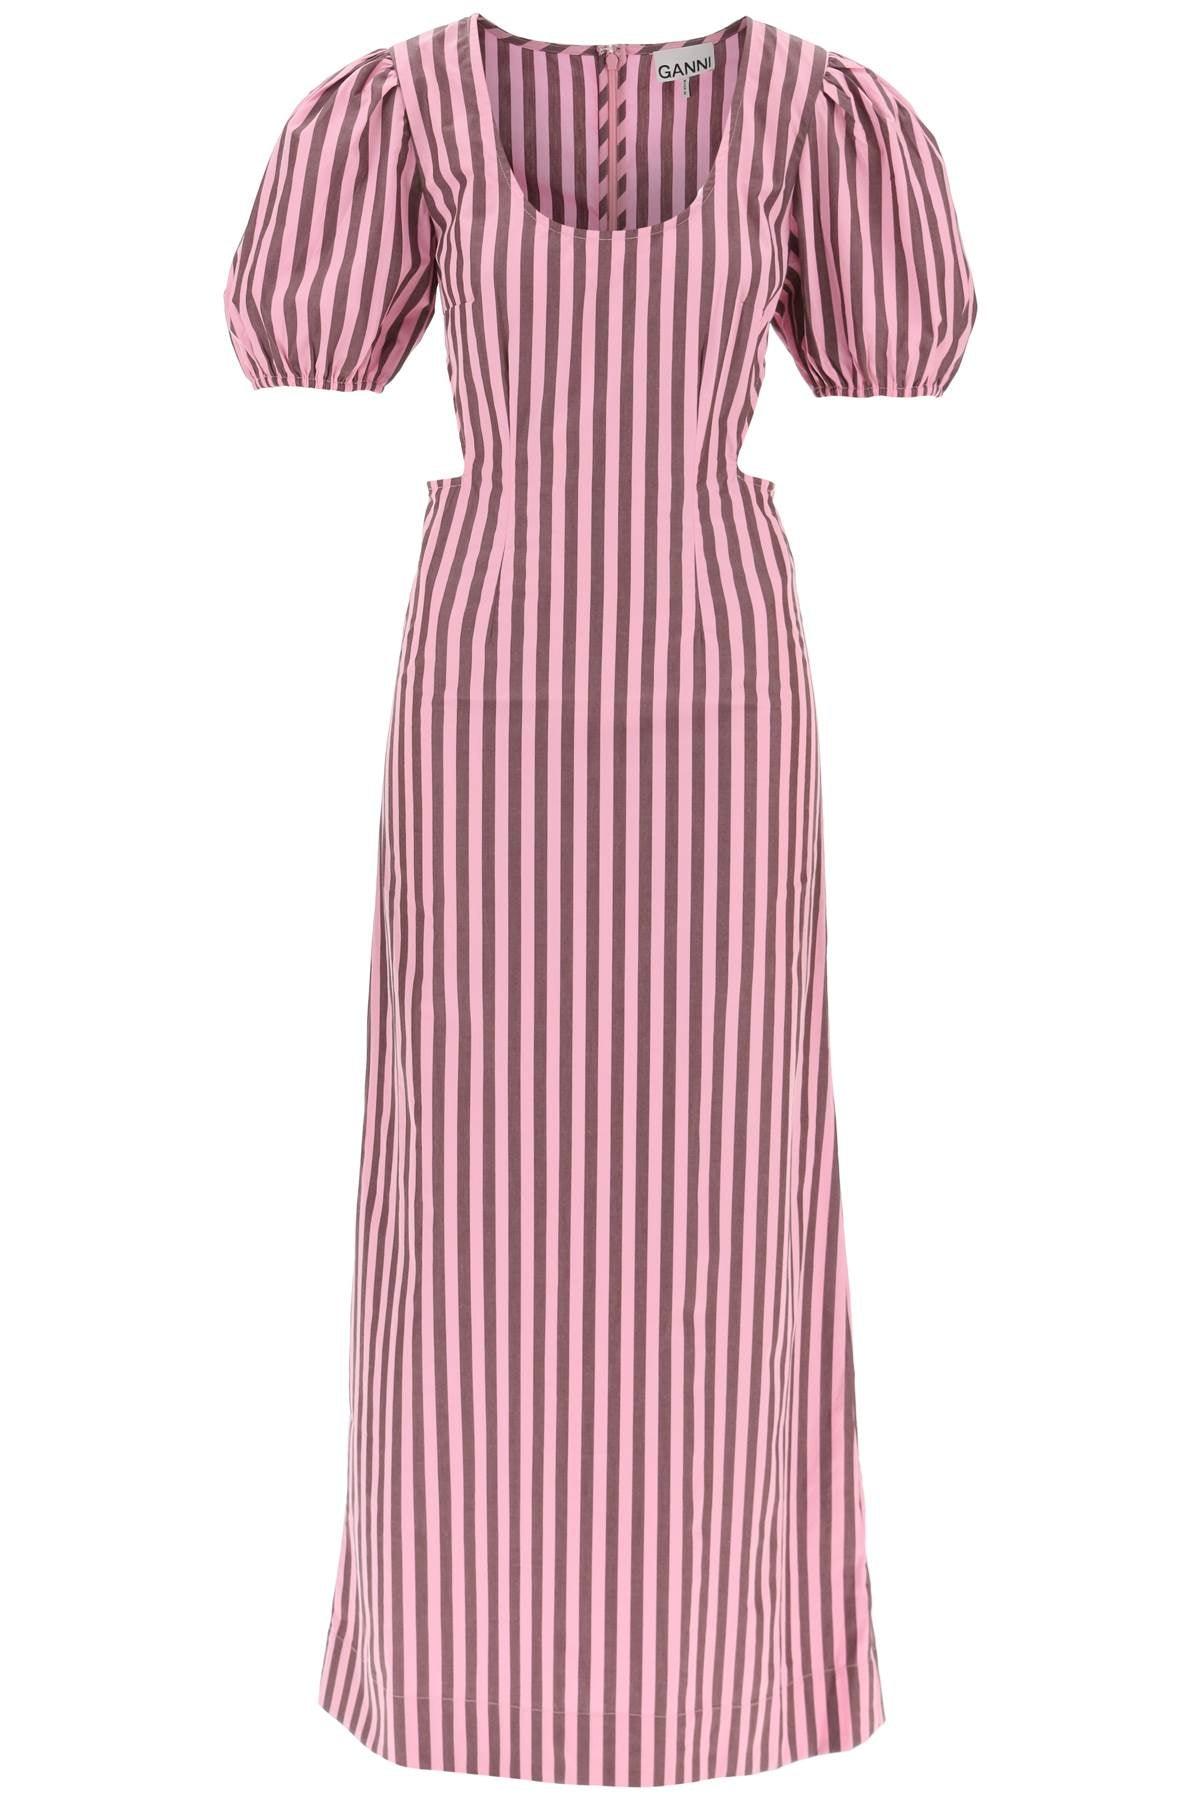 Ganni Striped Maxi Dress With Cut Outs - JOHN JULIA